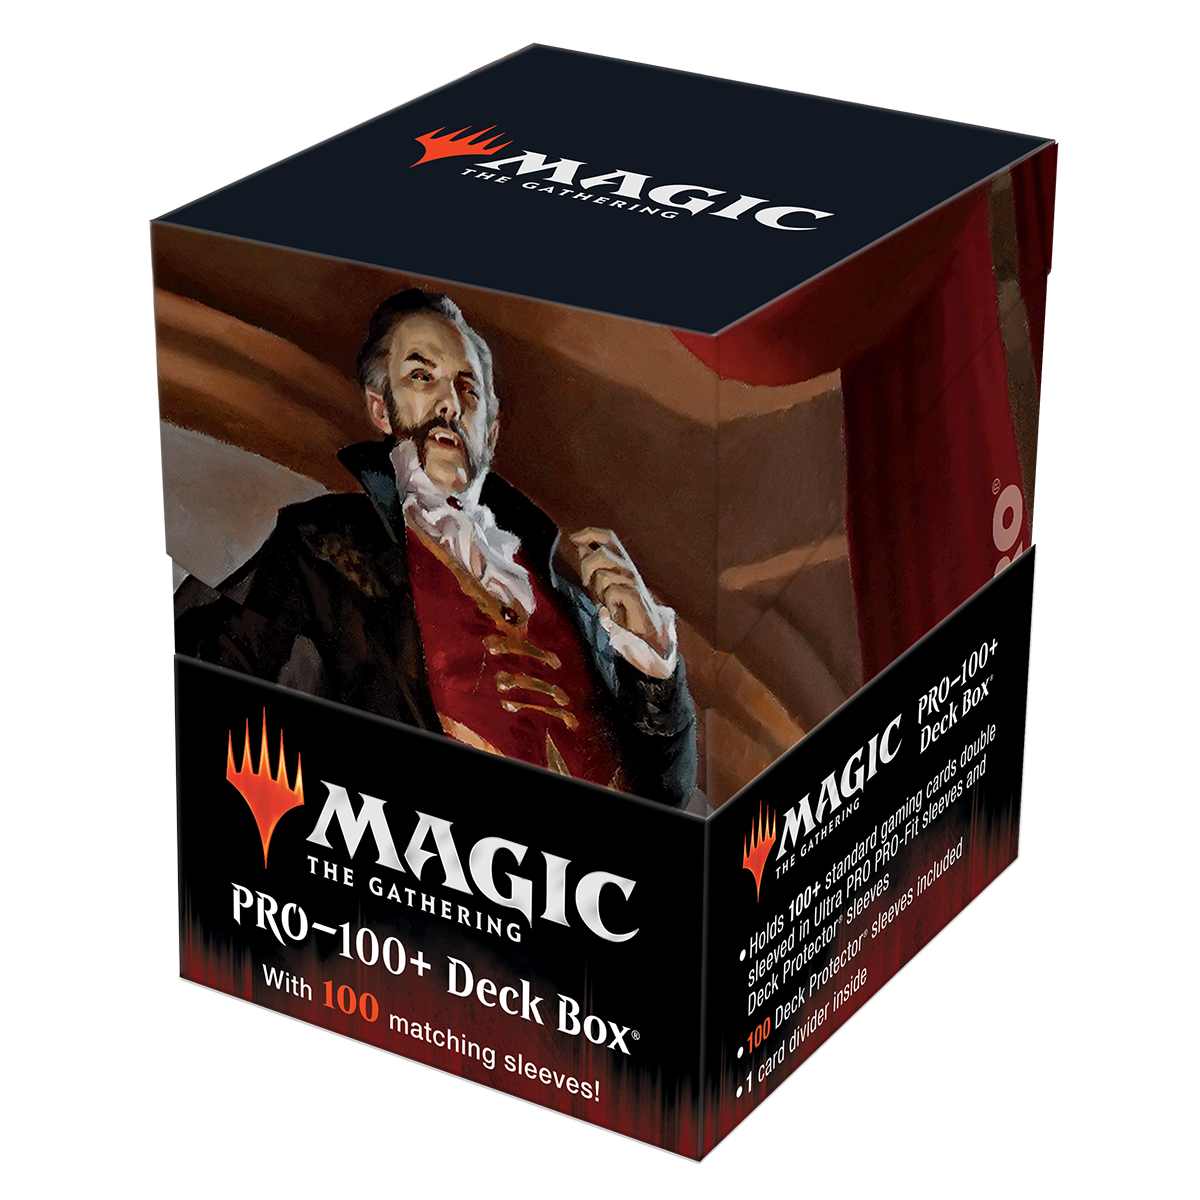 Innistrad: Crimson Vow Strefan, Maurer Progenitor Commander Combo Box for Magic: The Gathering | Ultra PRO International